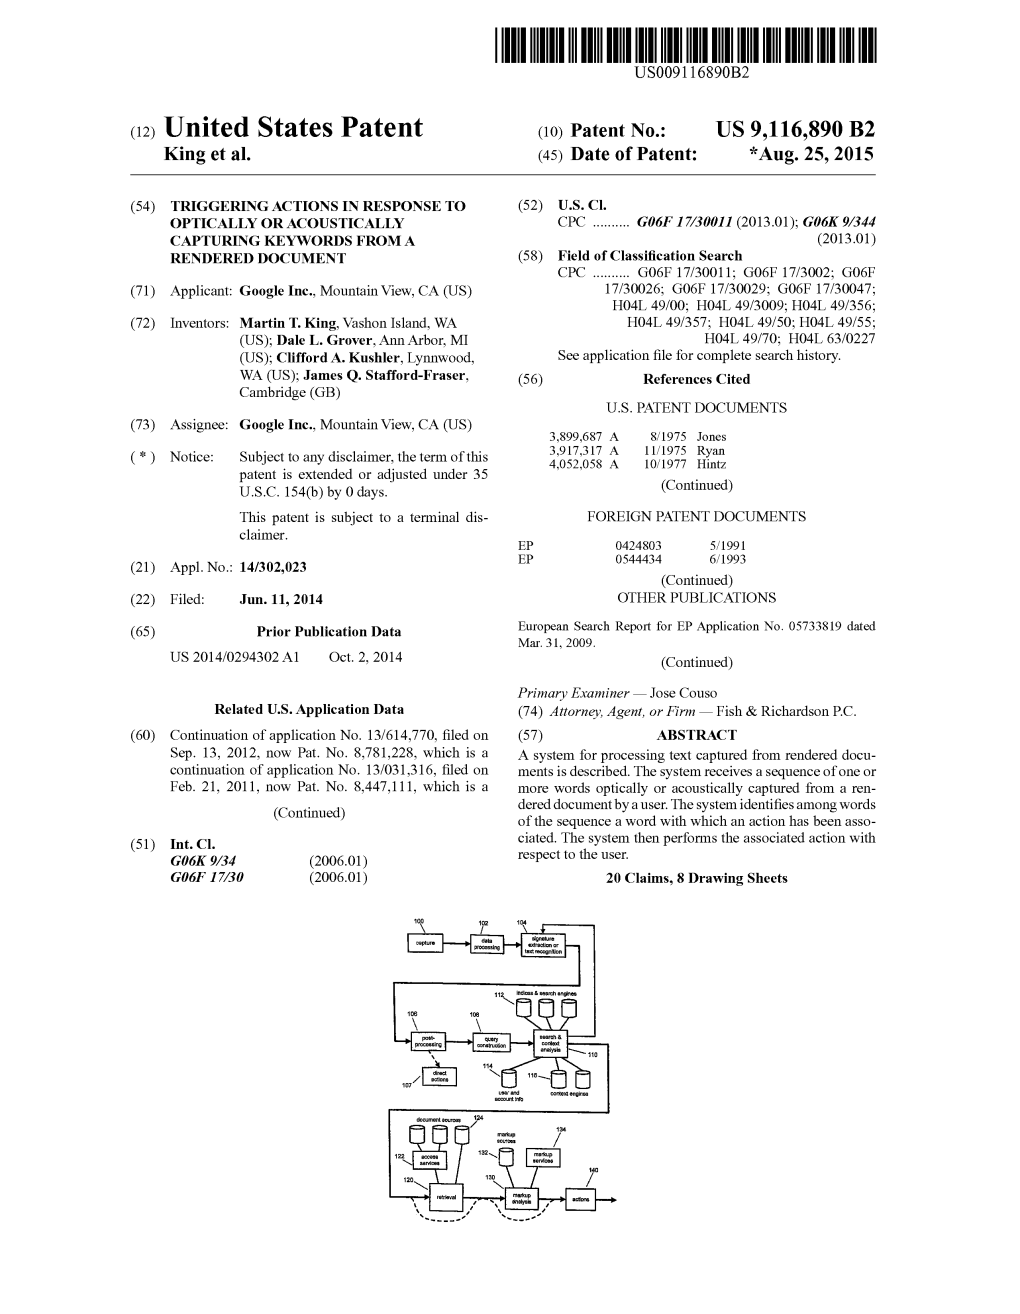 (12) United States Patent (10) Patent No.: US 9,116,890 B2 King Et Al